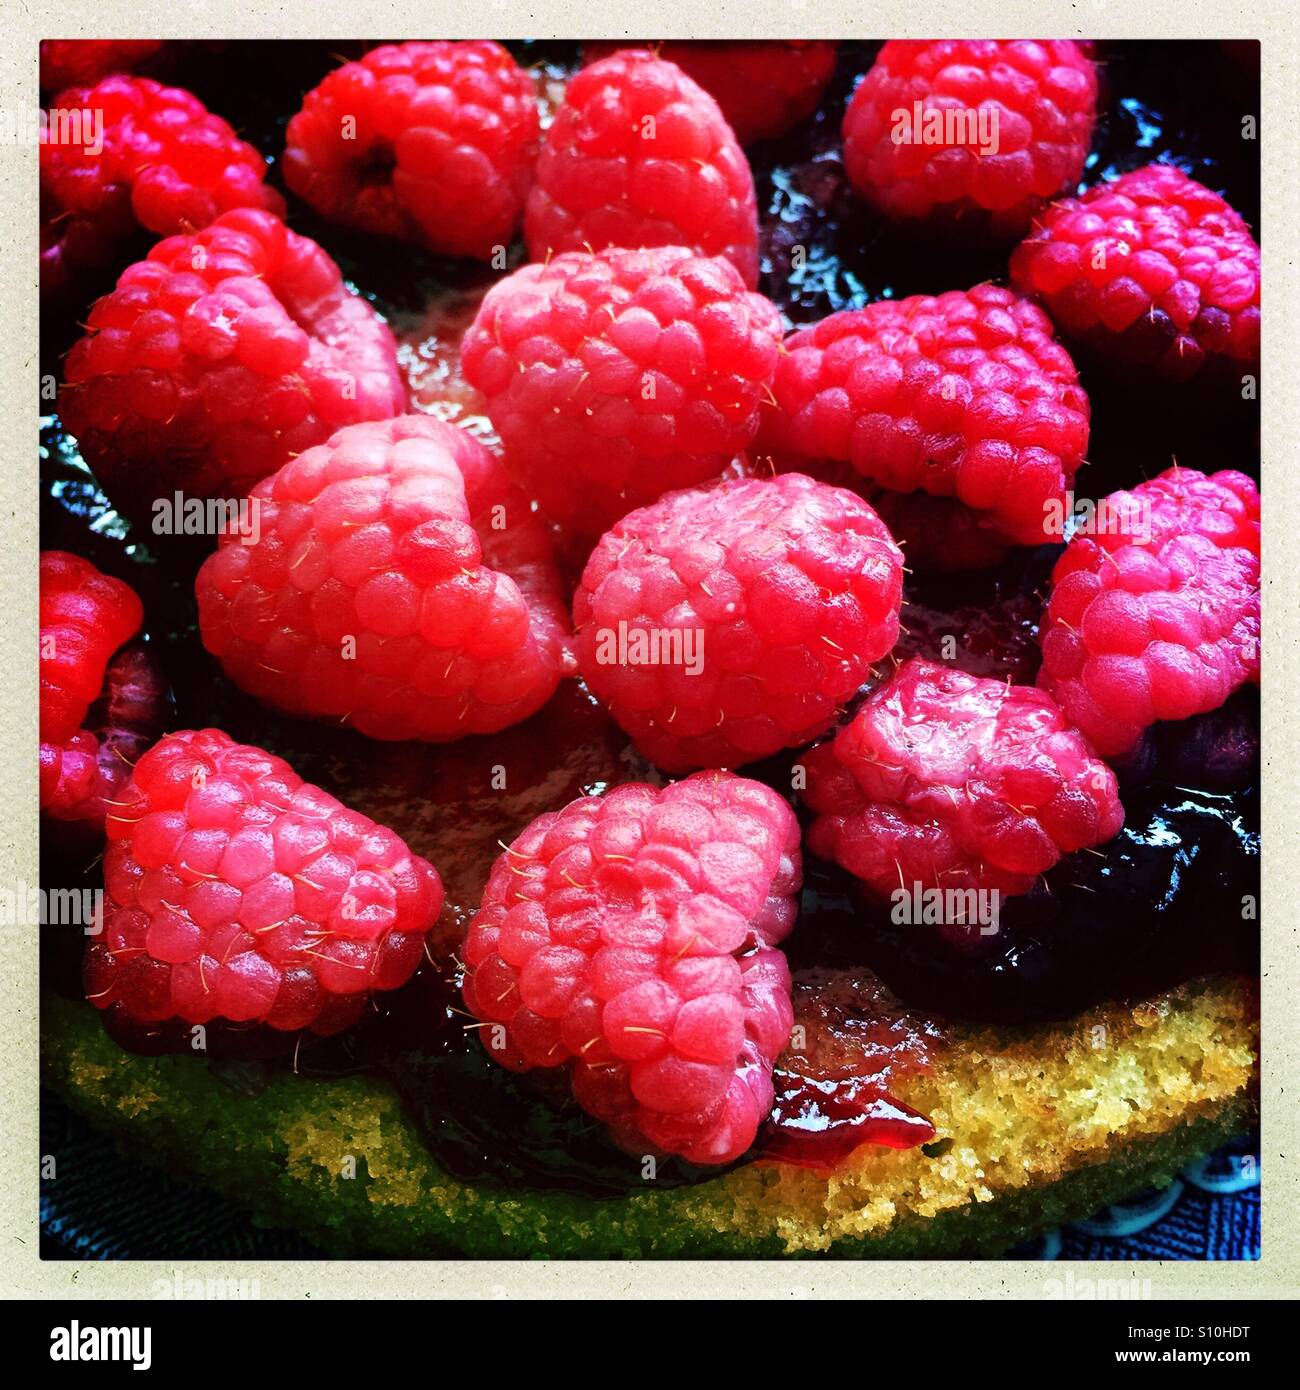 Raspberries, raspberry jam on sponge cake Stock Photo